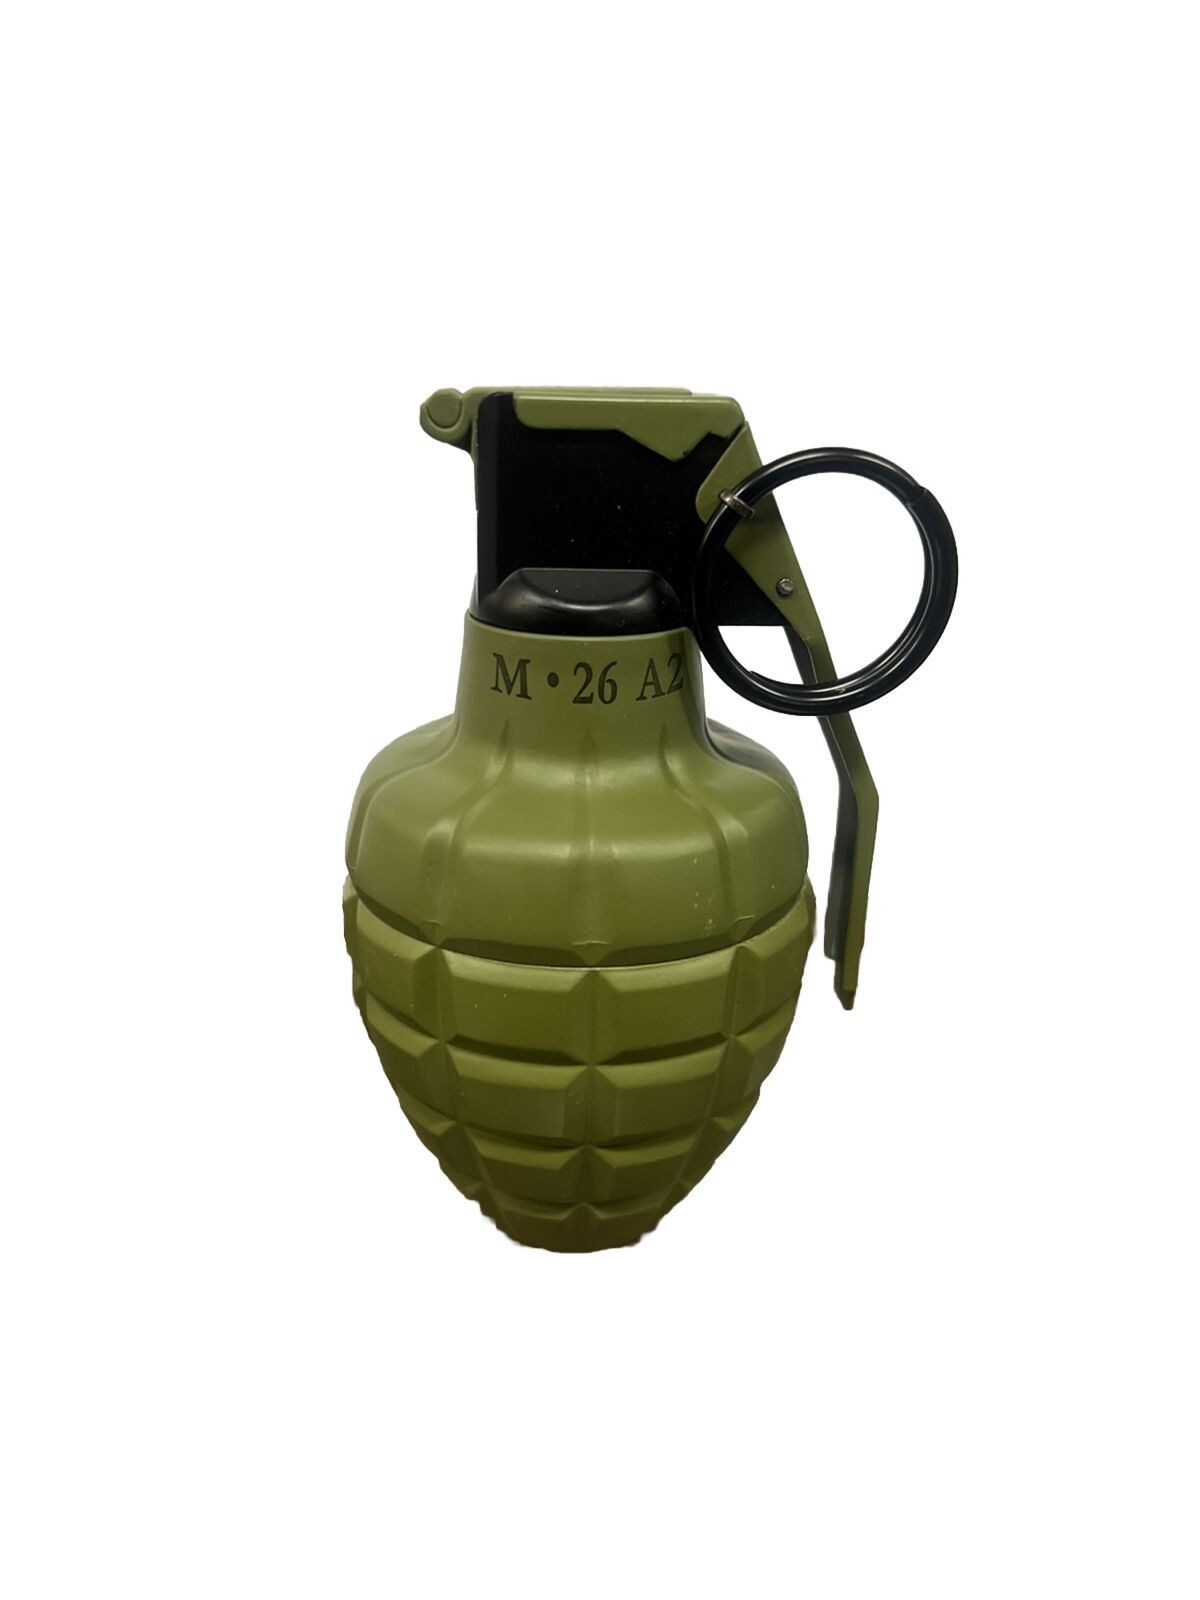 Replica 1:1 Scale Pineapple Grenade US Army Full Scale SWAT Lighter Metal Dummy